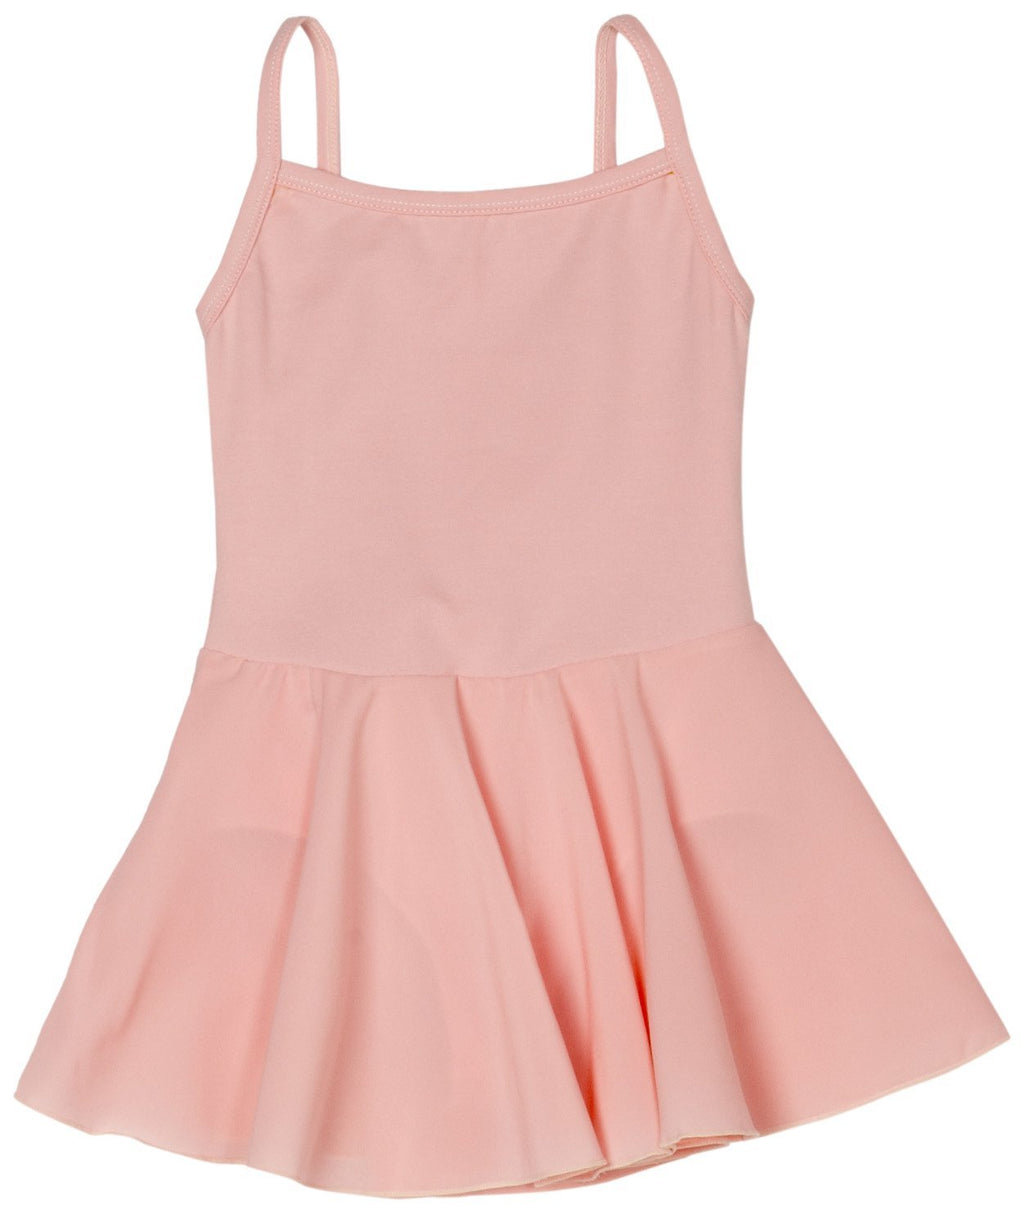 [AUSTRALIA] - Sansha Little Girls' Savanah Camisole Dress Small(C)/4-6 Light Pink 